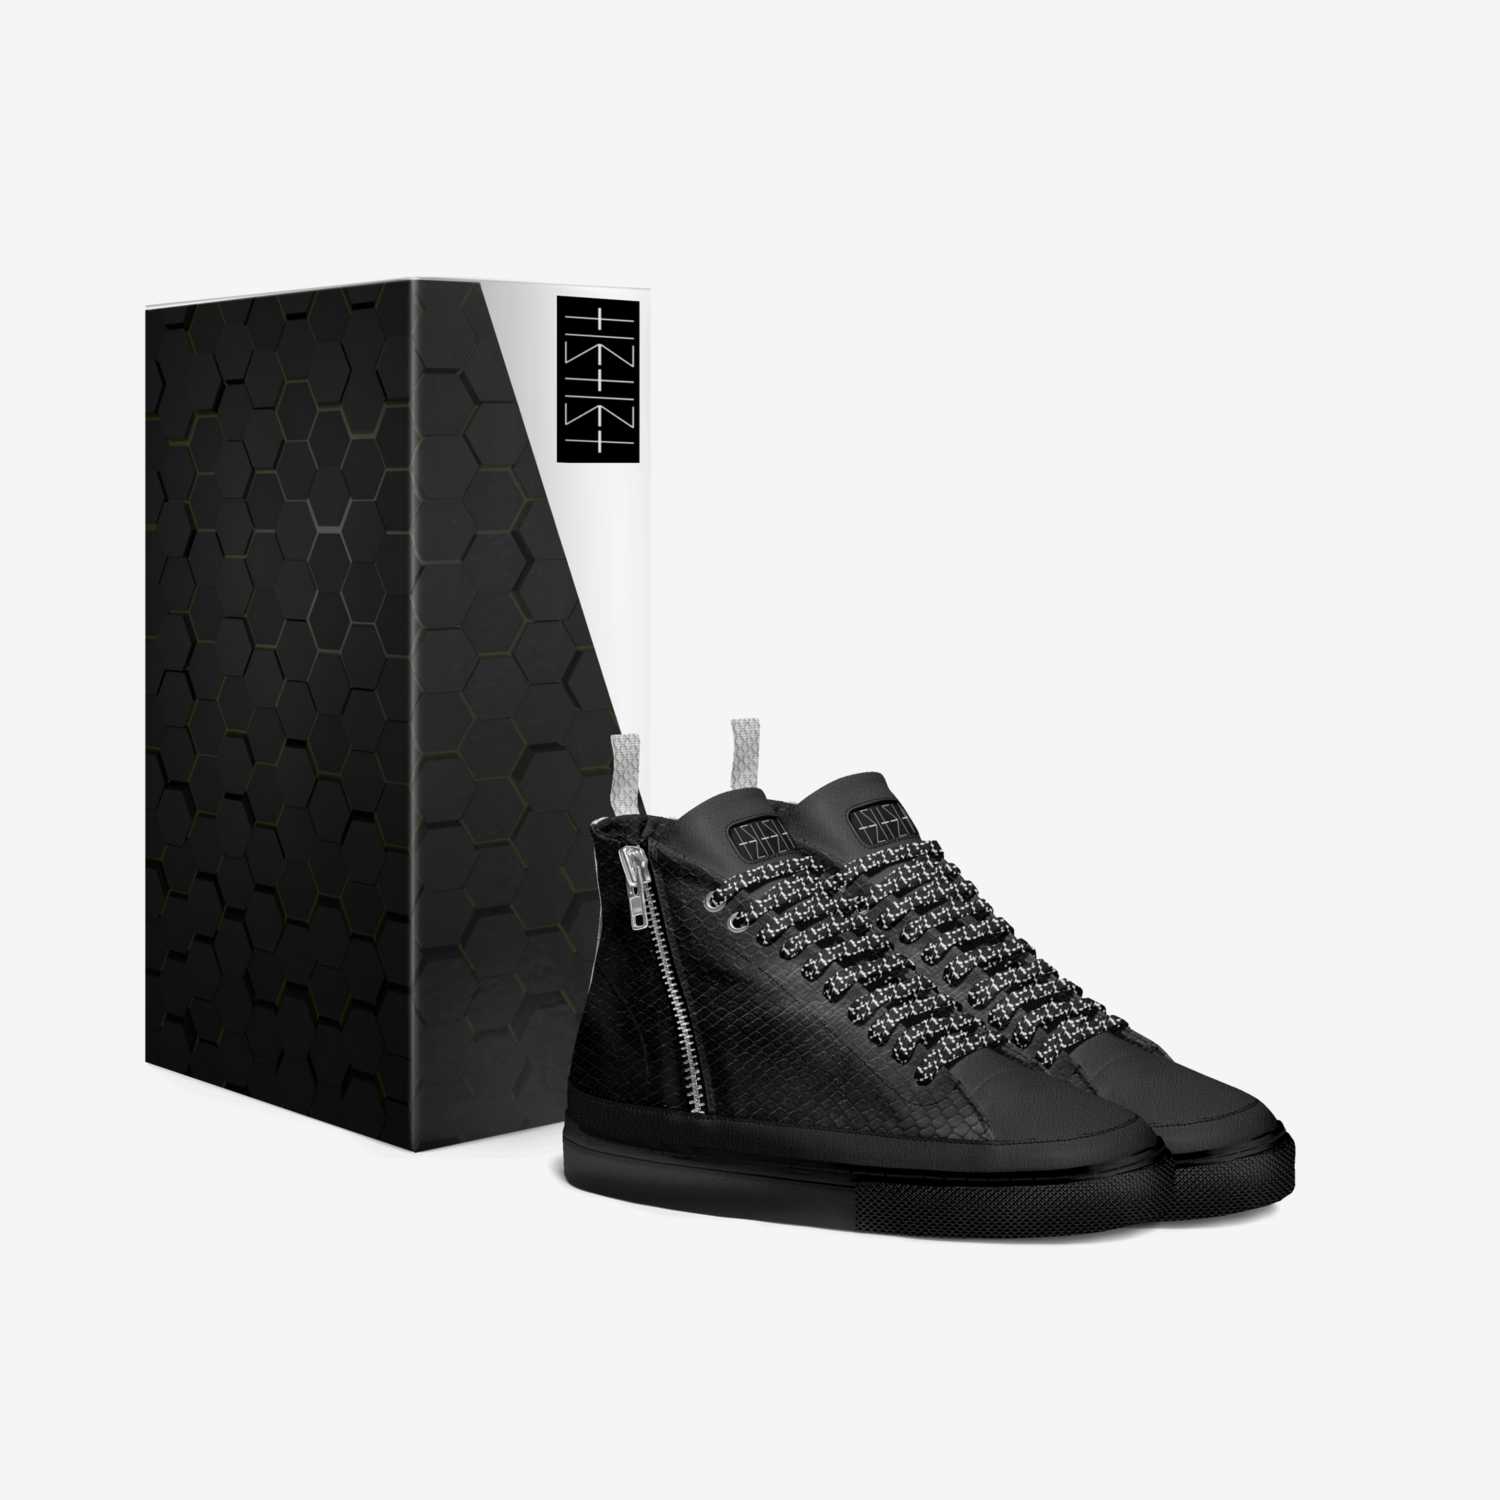 TT No.5 LE. custom made in Italy shoes by Ricardo Yoreh Ladino | Box view